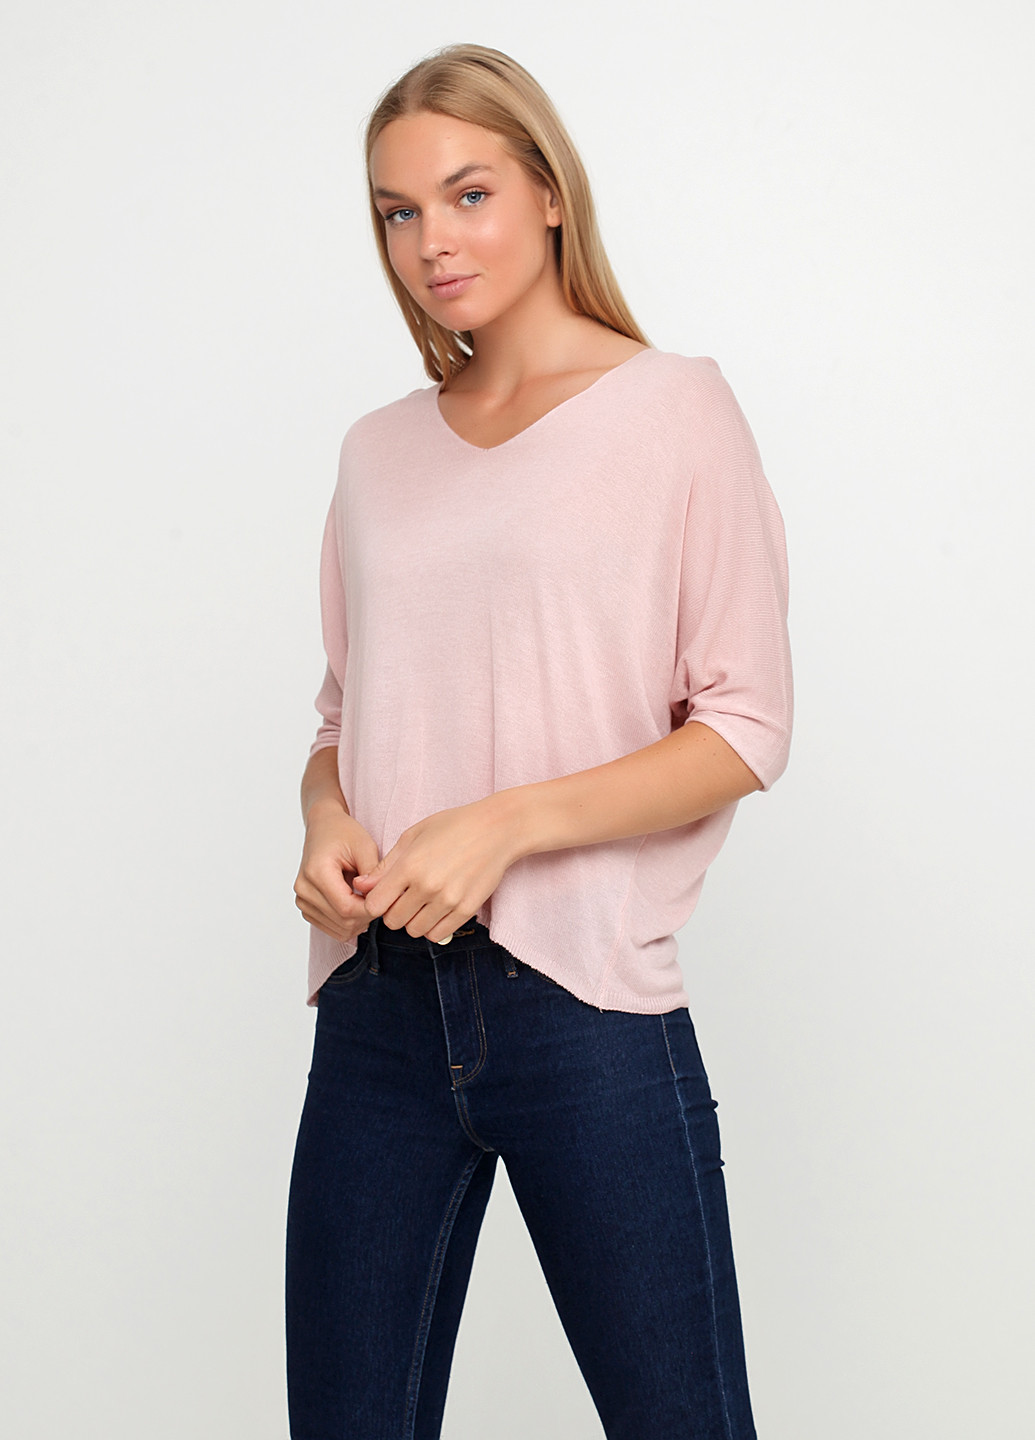 Светло-розовый демисезонный пуловер пуловер Pretty Style